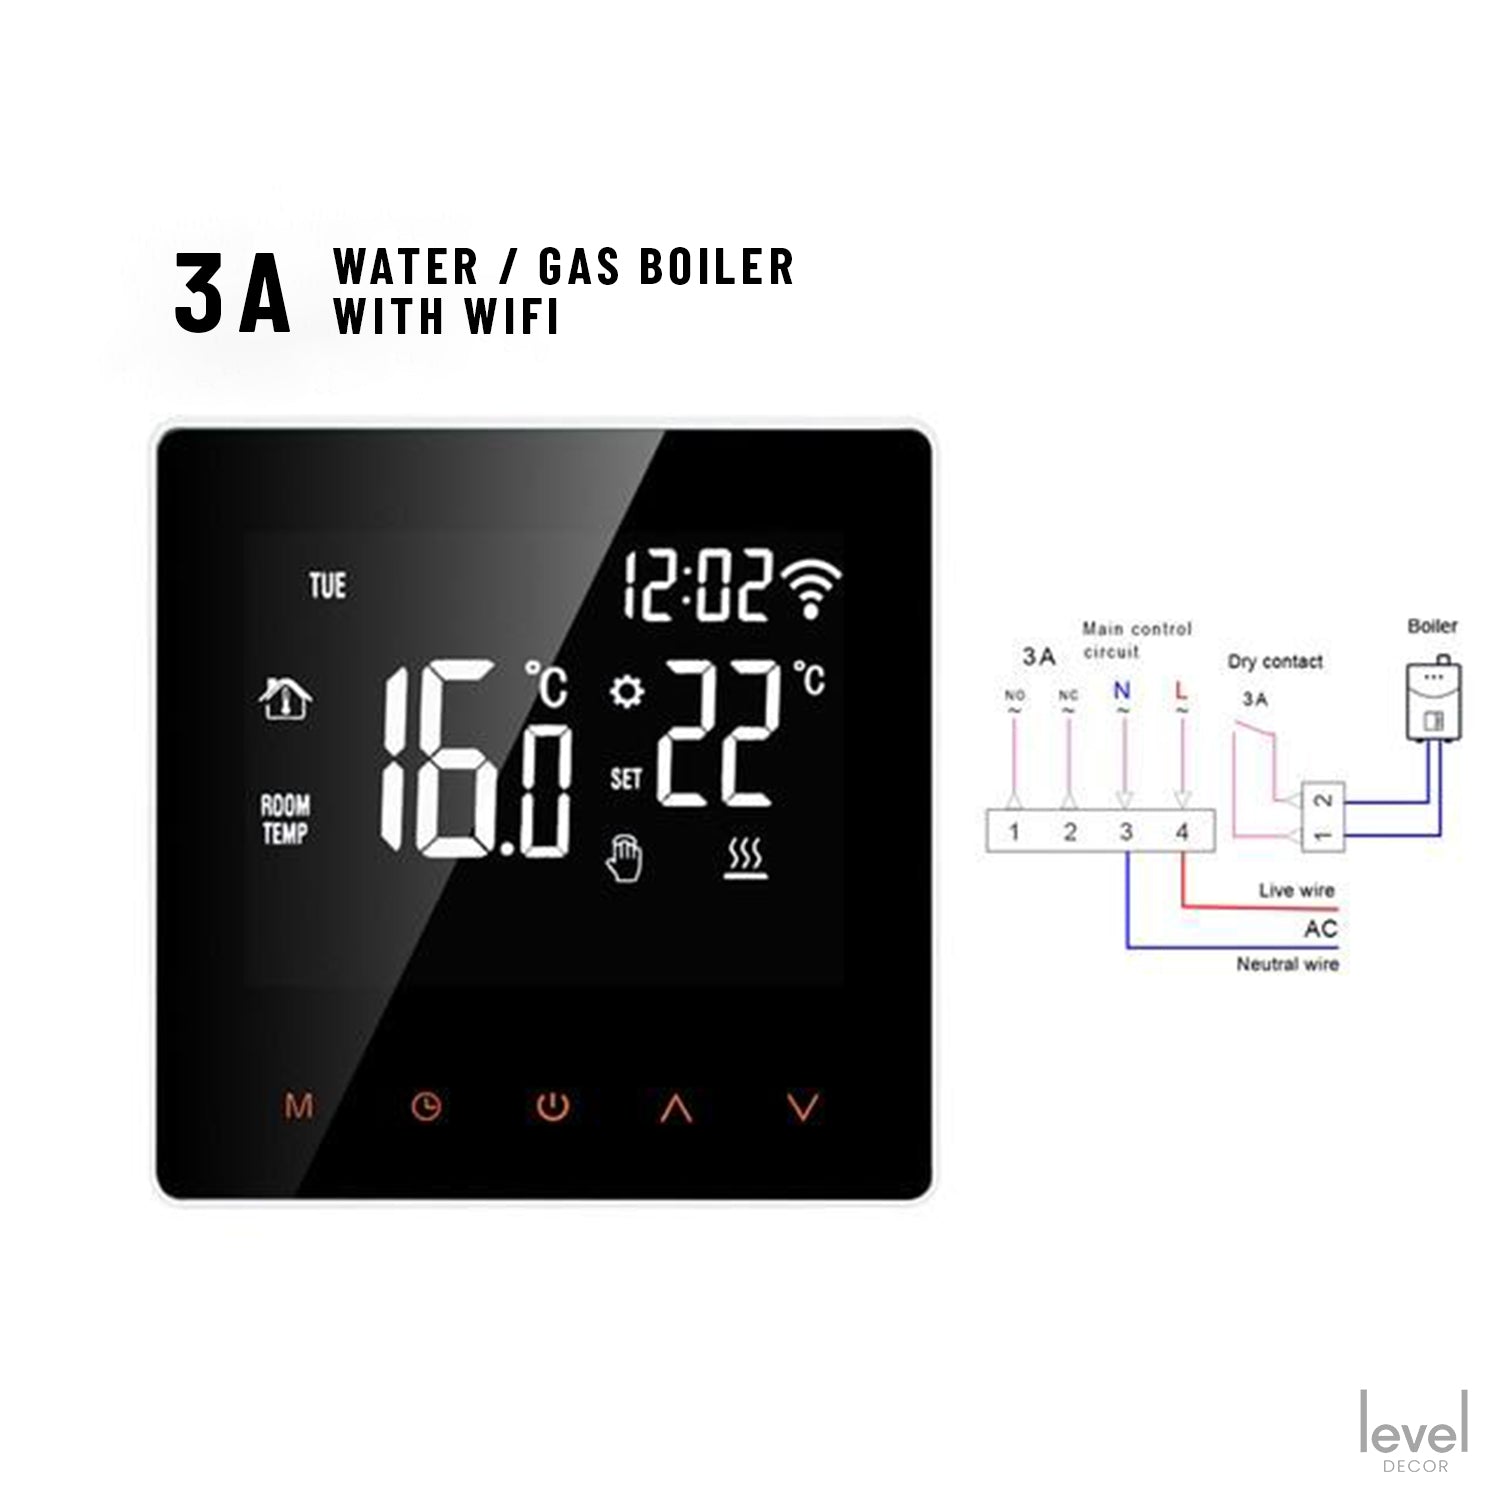 KETA WiFi Smart Thermostat | with Remote Controller for Google Home, Alexa - WiFi 3A Water/Gas Boiler - Level Decor